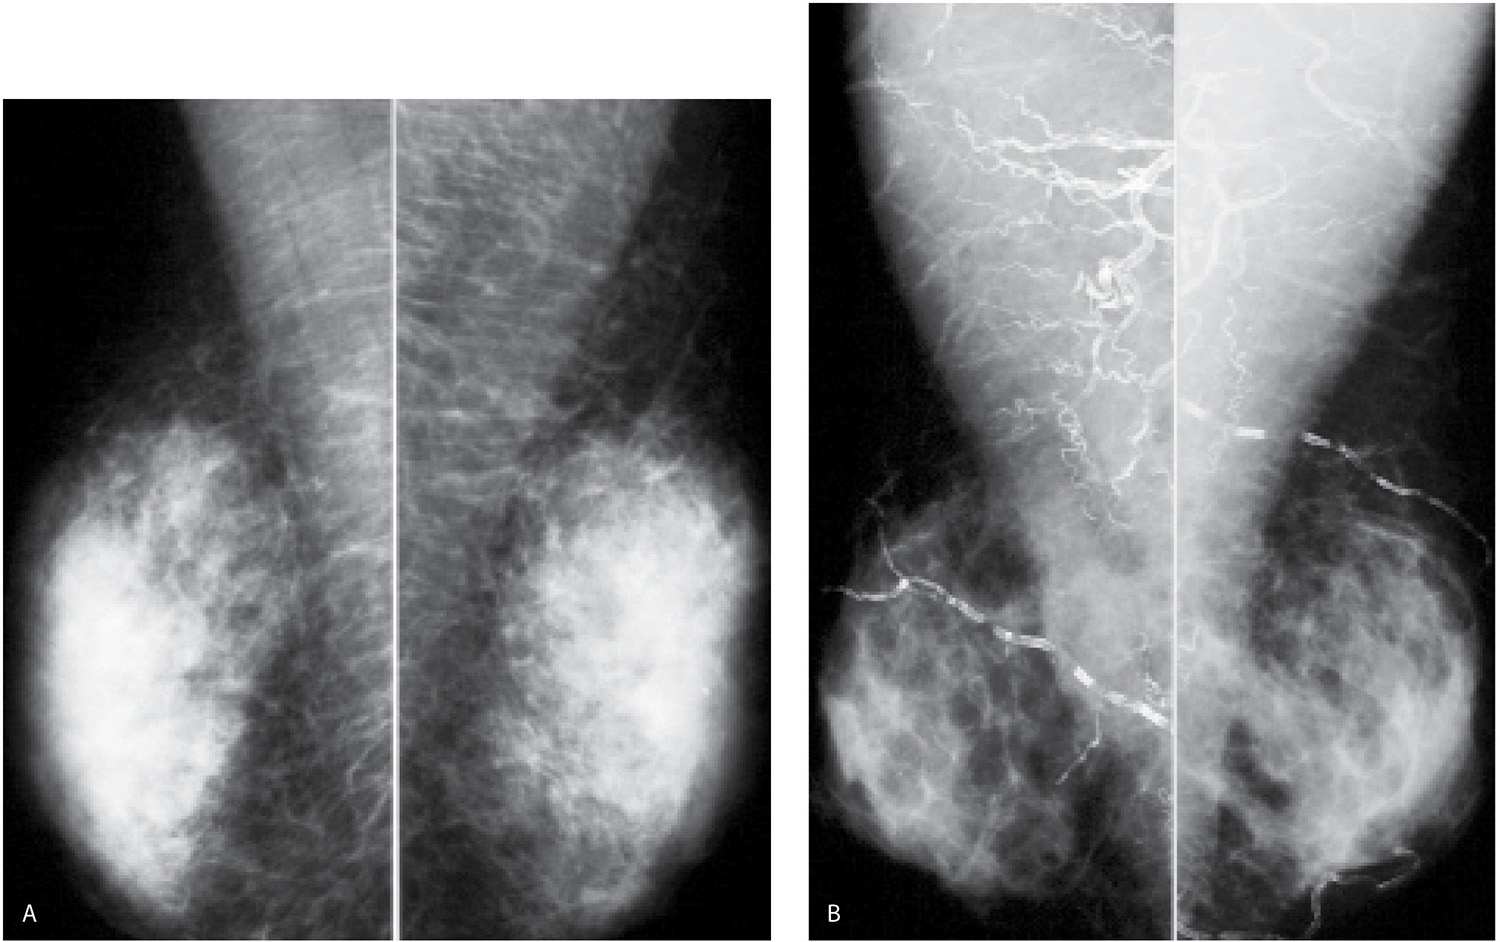 Breast mammogram showed bilateral benign gynecomastia, with the